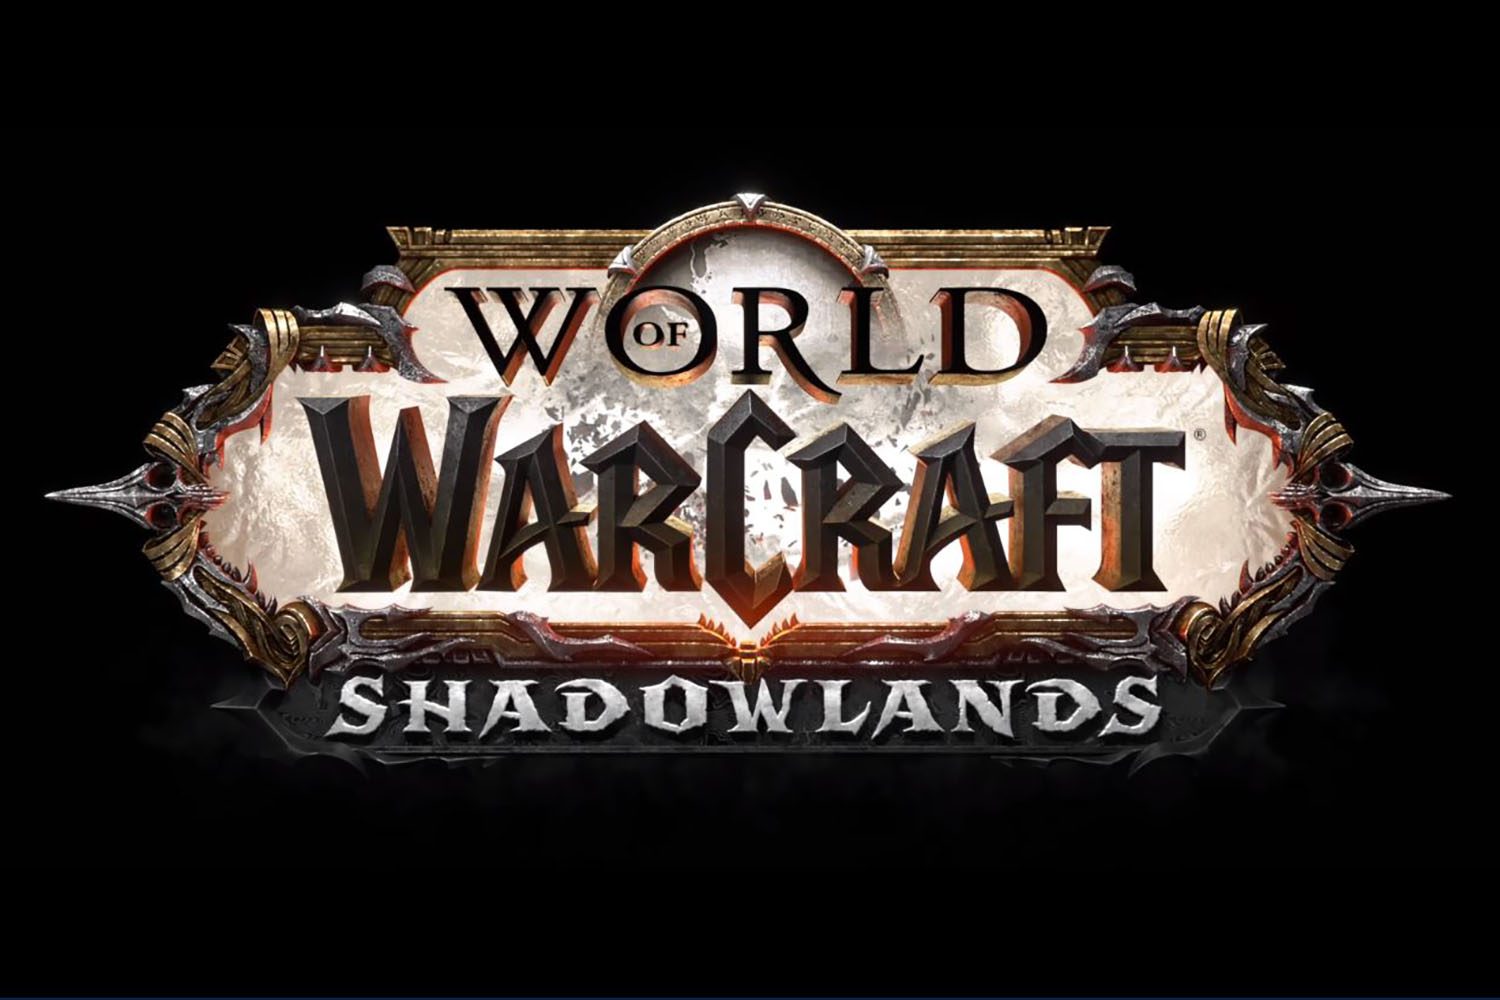 World of Warcraft Shadowlands announcement logo